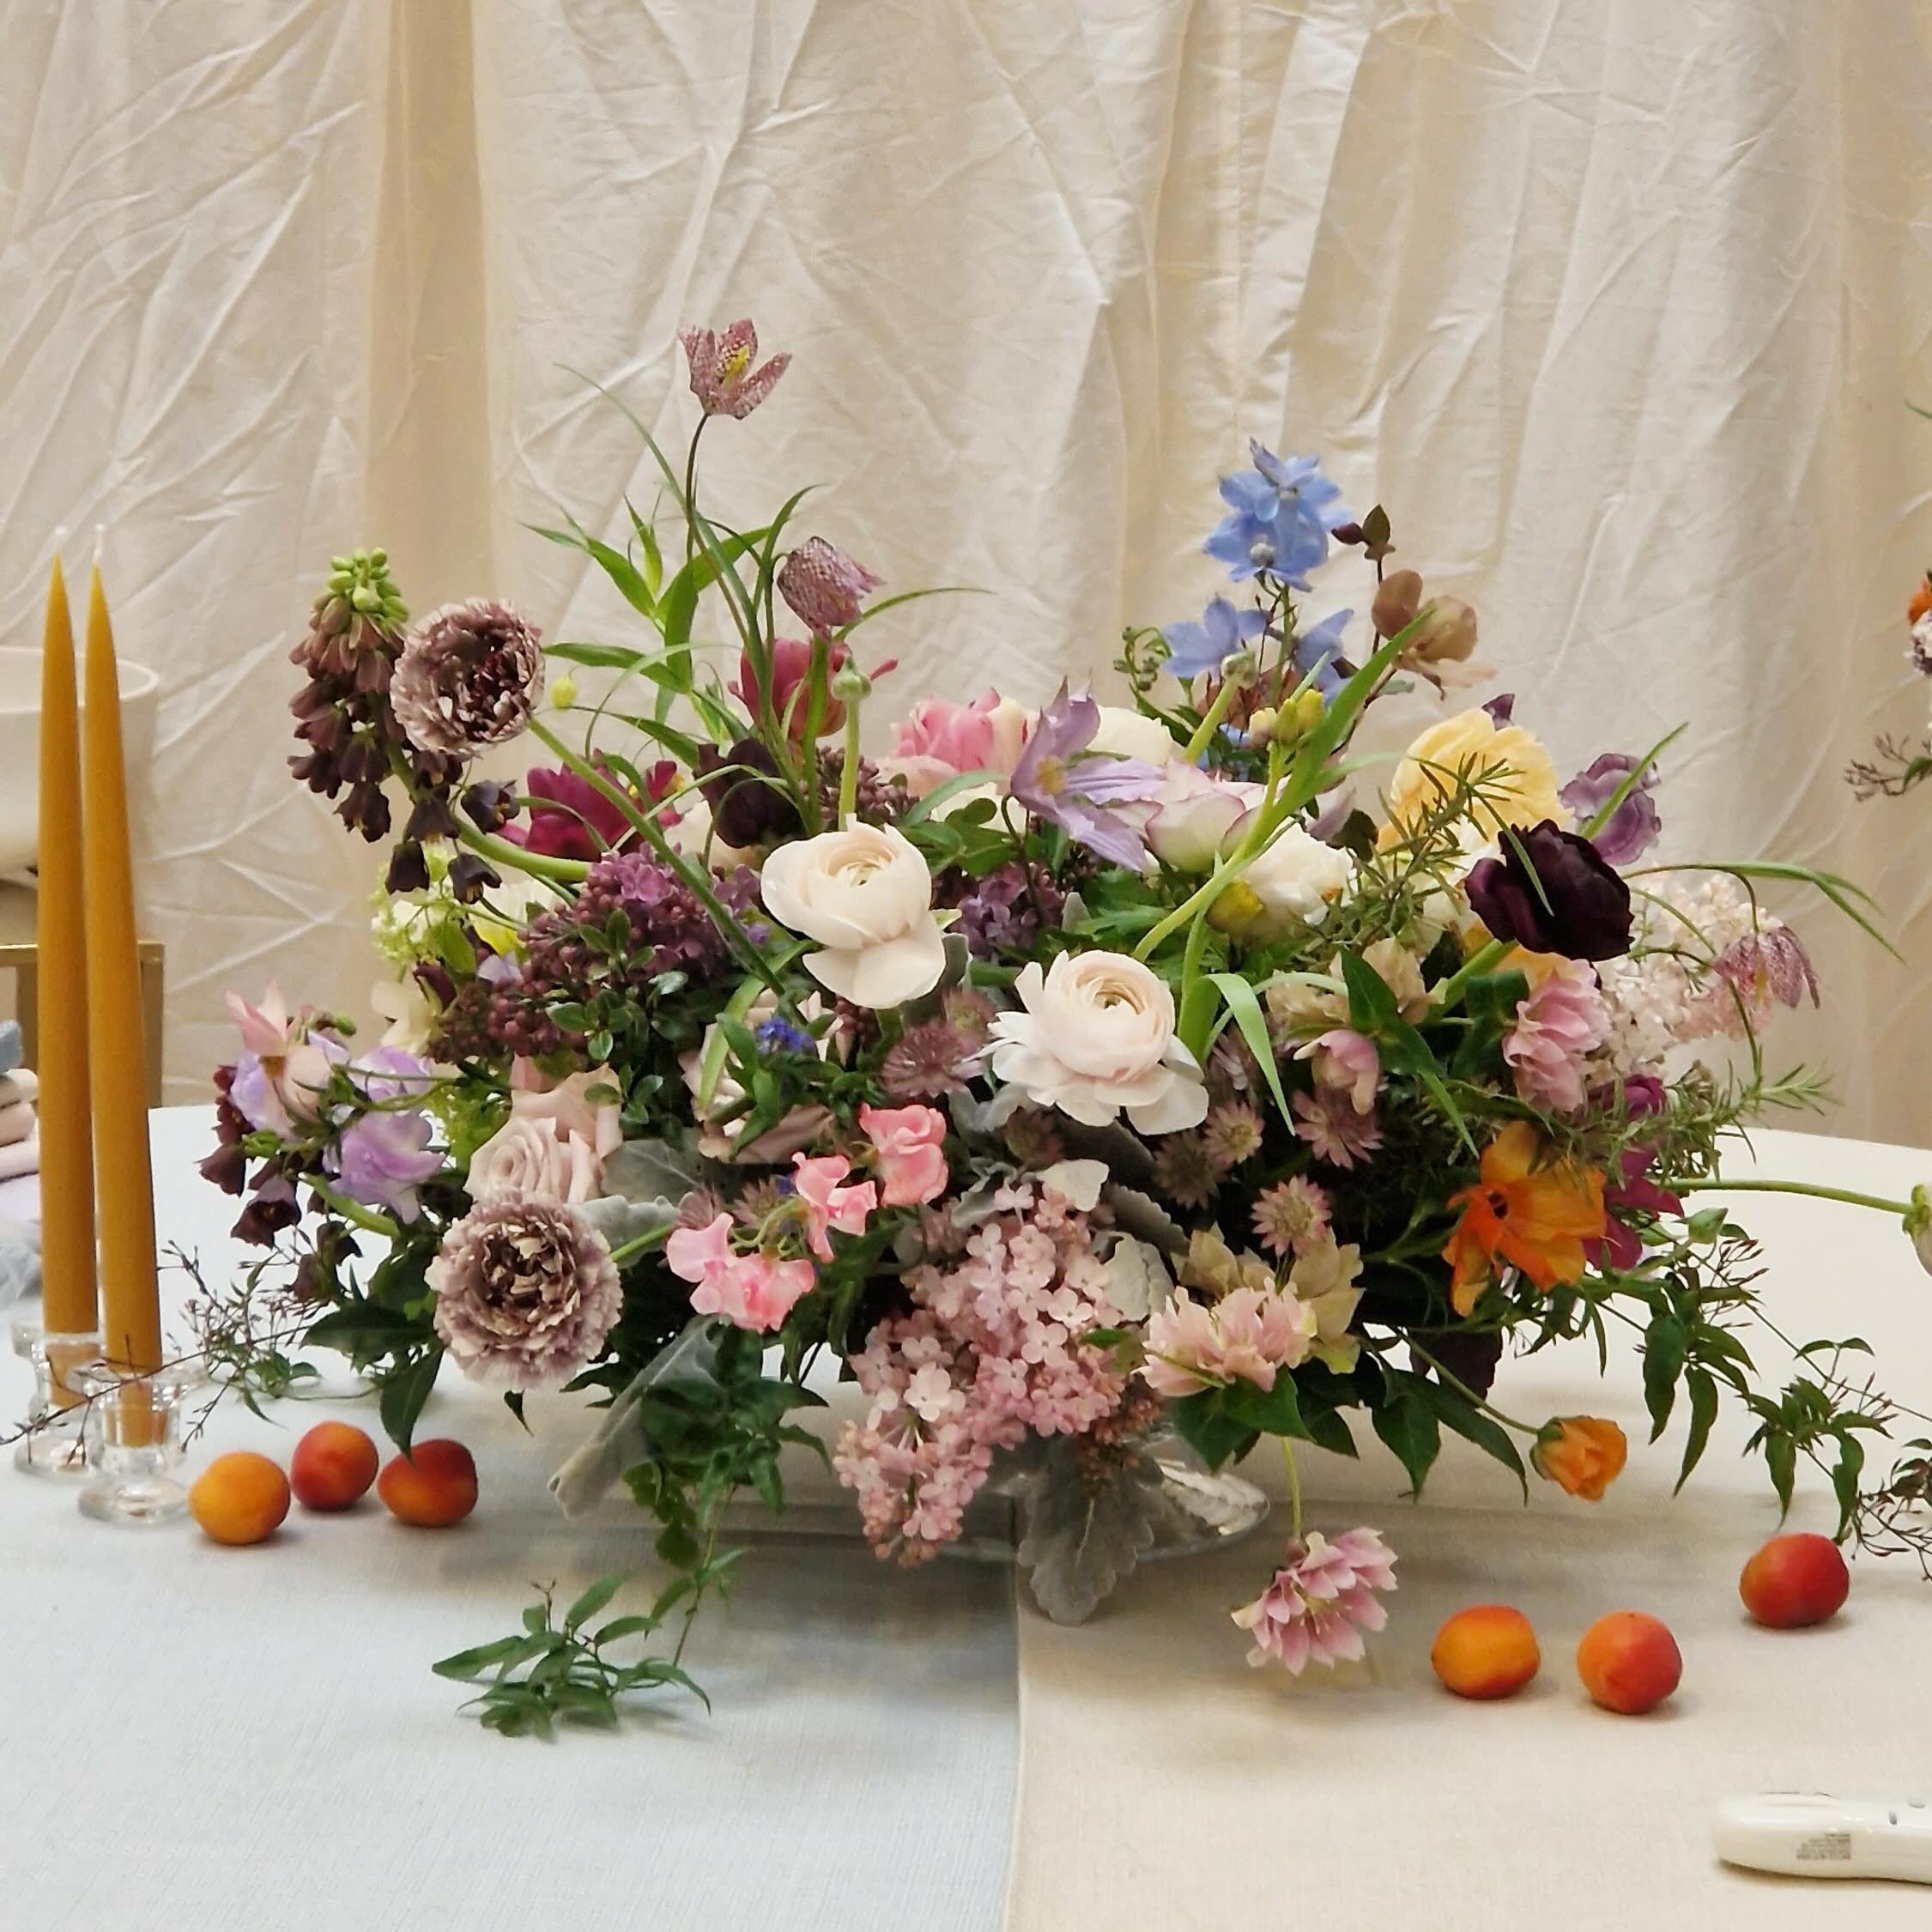 Wedding season sampling with a bounty of British flowers 🍃

#weddingdesign #weddingflowers #weddingplanning #weddingplanner #wedding #britishflowers #veeverscarter